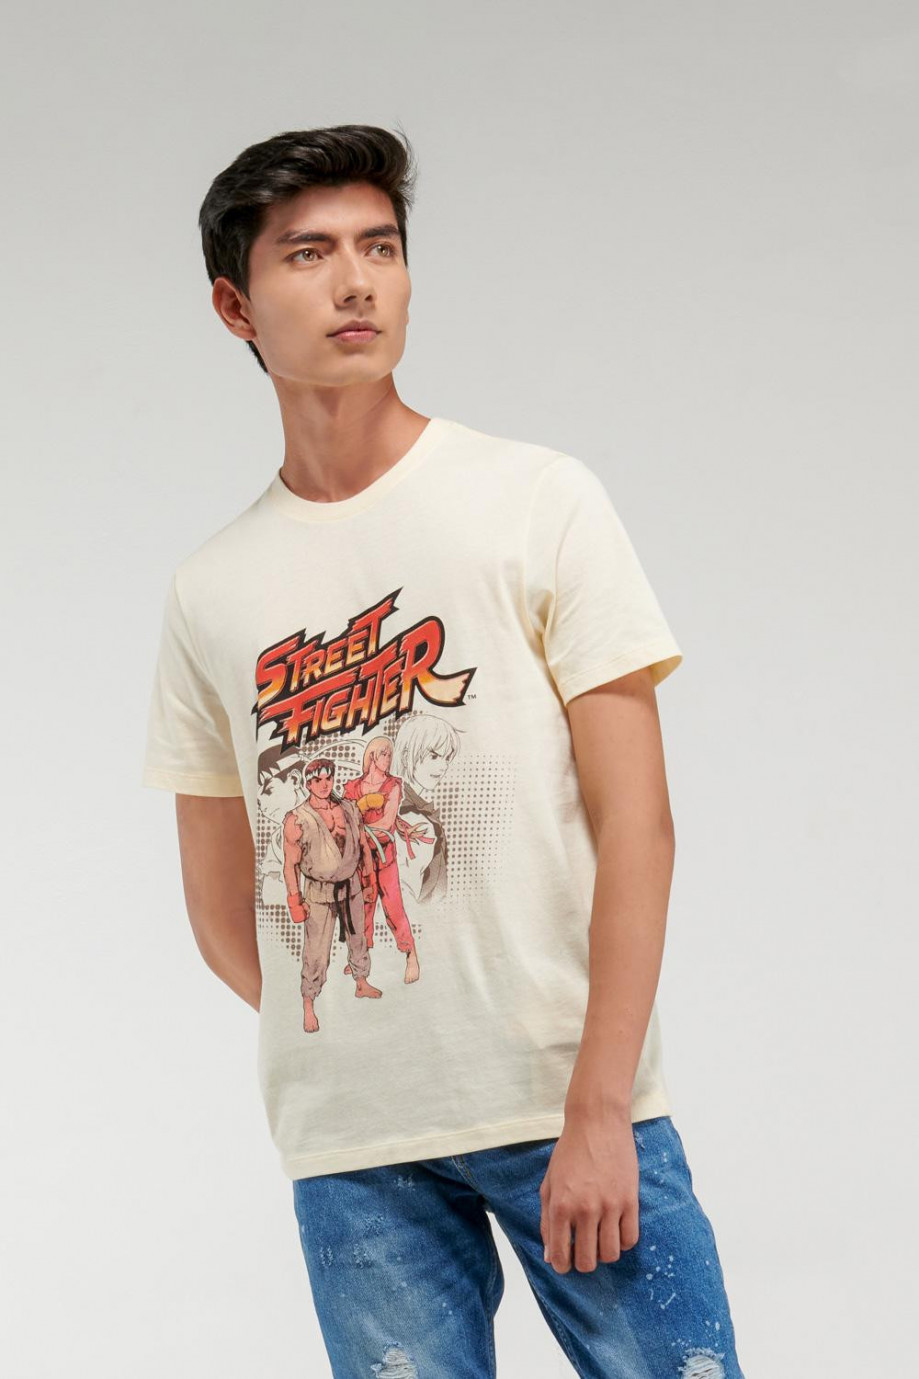 Camiseta manga corta, estampado de Street Fighter.